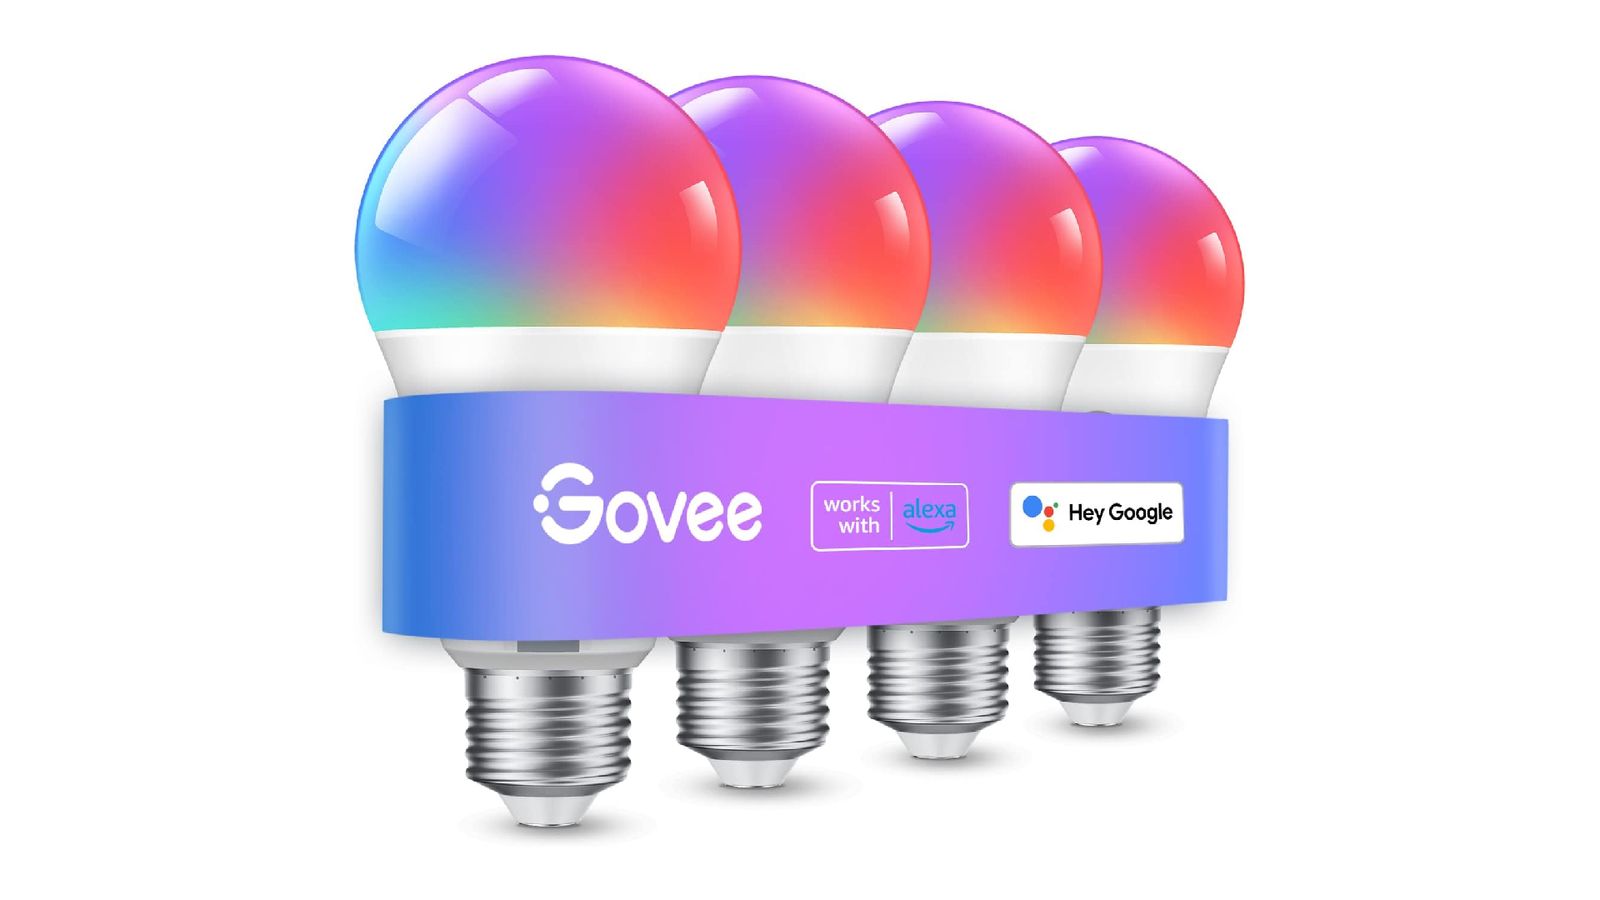 Govee Smart Bulbs product image of four bulbs in a row emitting purple, blue, and orange light.